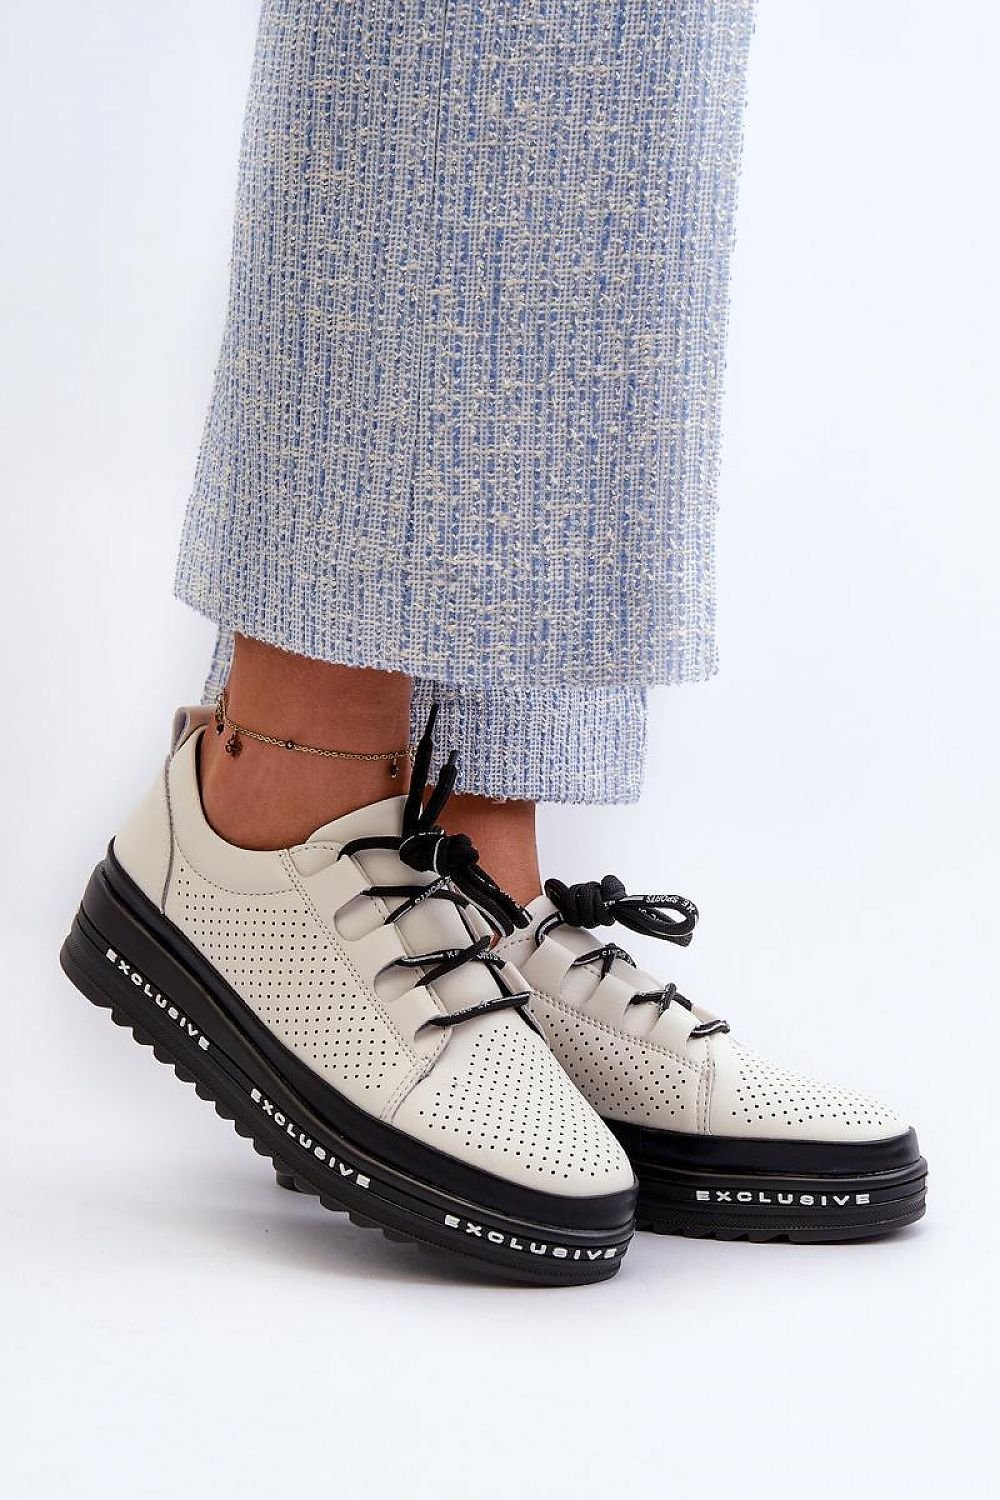 TEEK - Exclusive Pinhole Low Platform Womens Shoes SHOES TEEK MH 6.5  